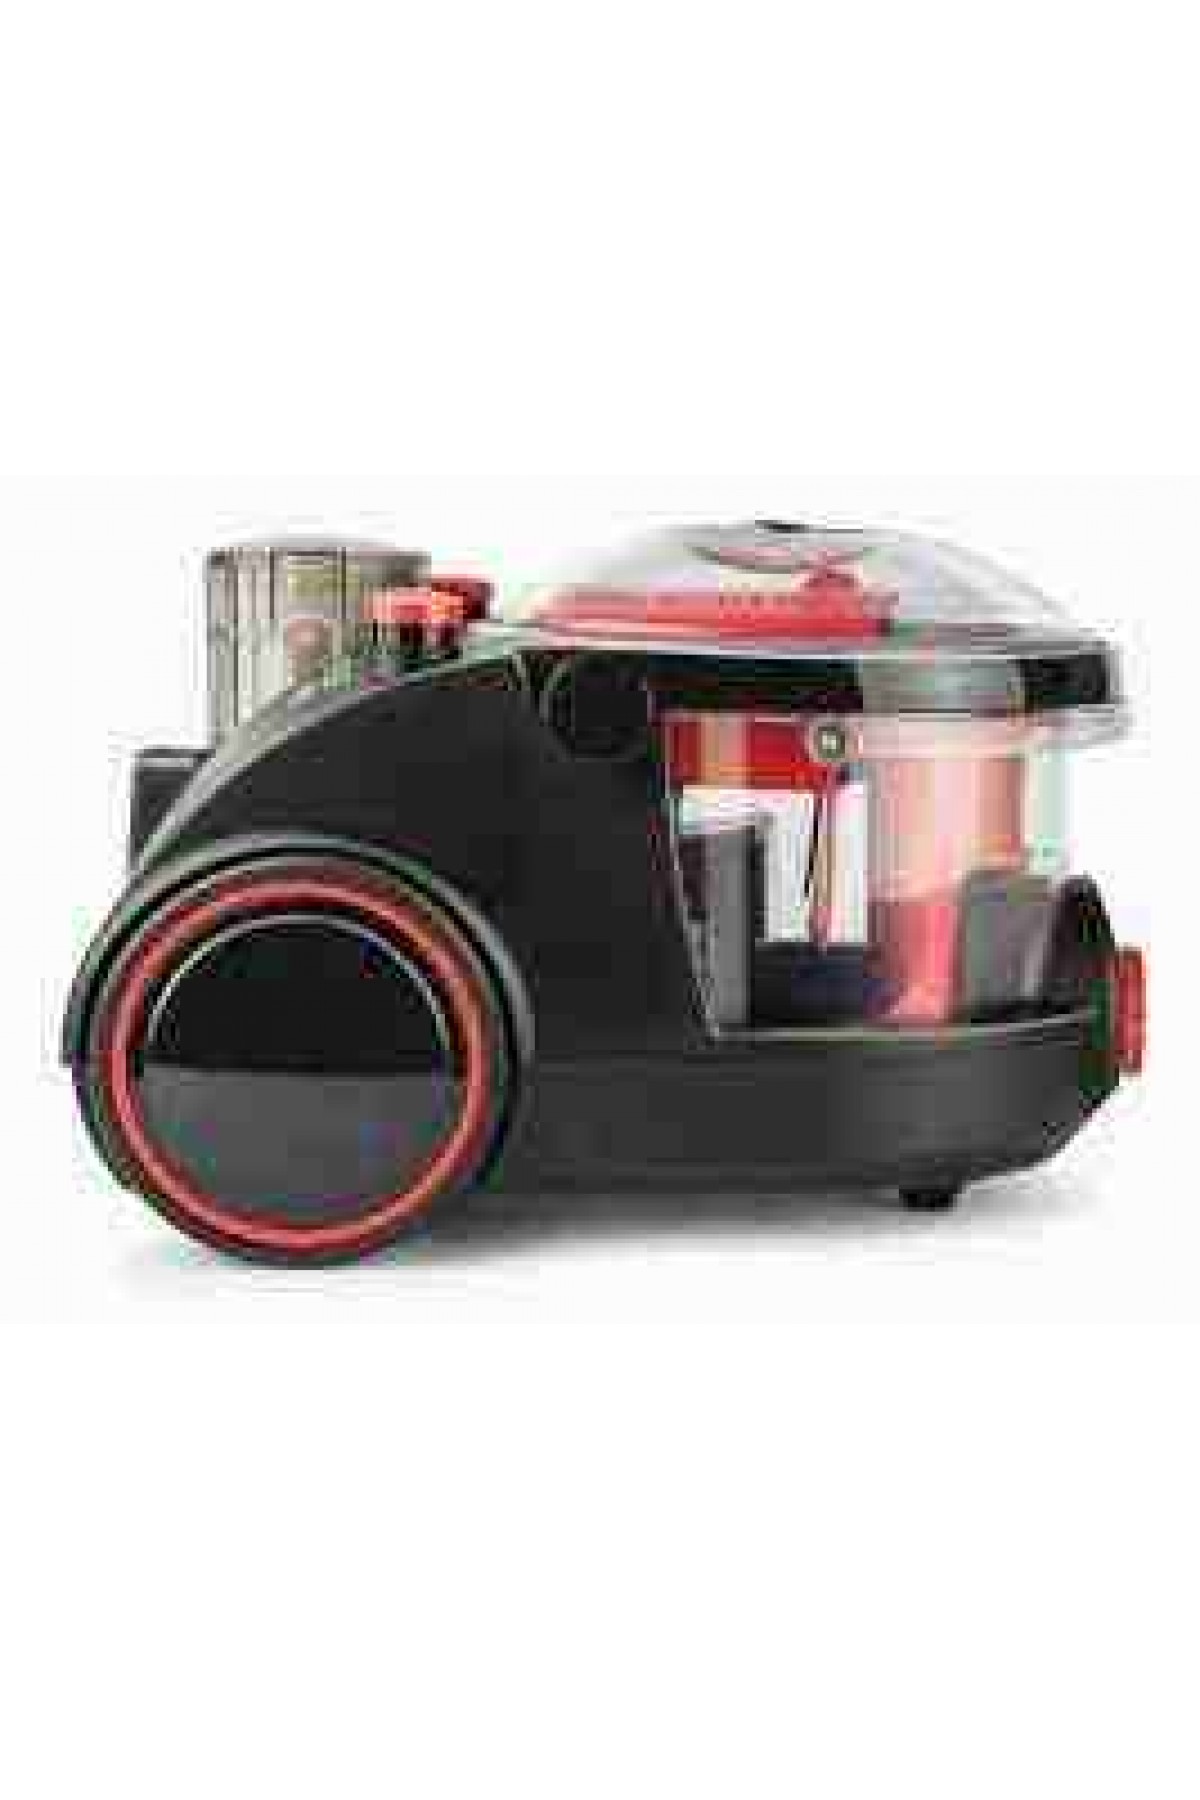 BORA 5000 Water Filter Vacuum Cleaner- red